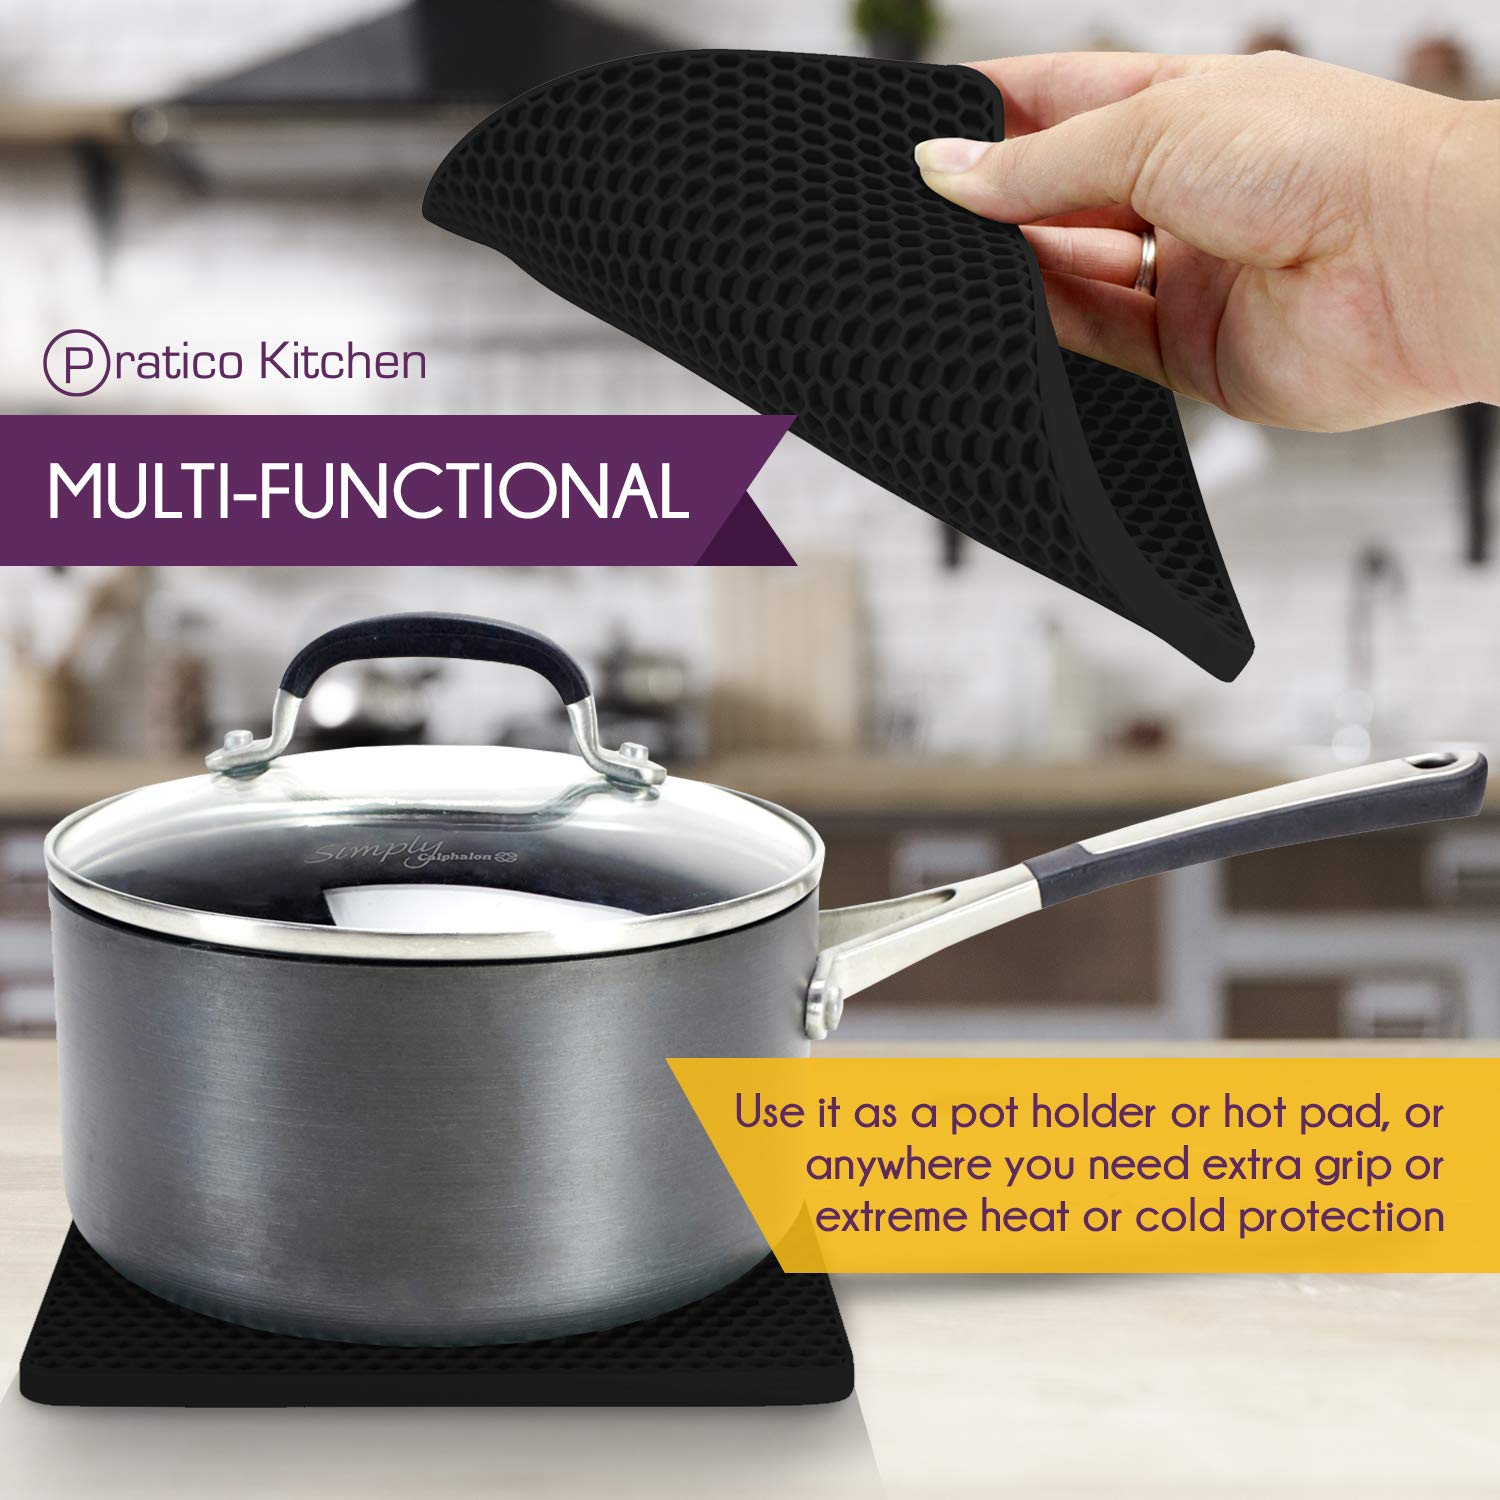 Pratico Kitchen Silicone Pot Holder, Multipurpose, Use as Trivet, Spoon Rest and Jar Opener, Black, 2 Pack - image 5 of 8